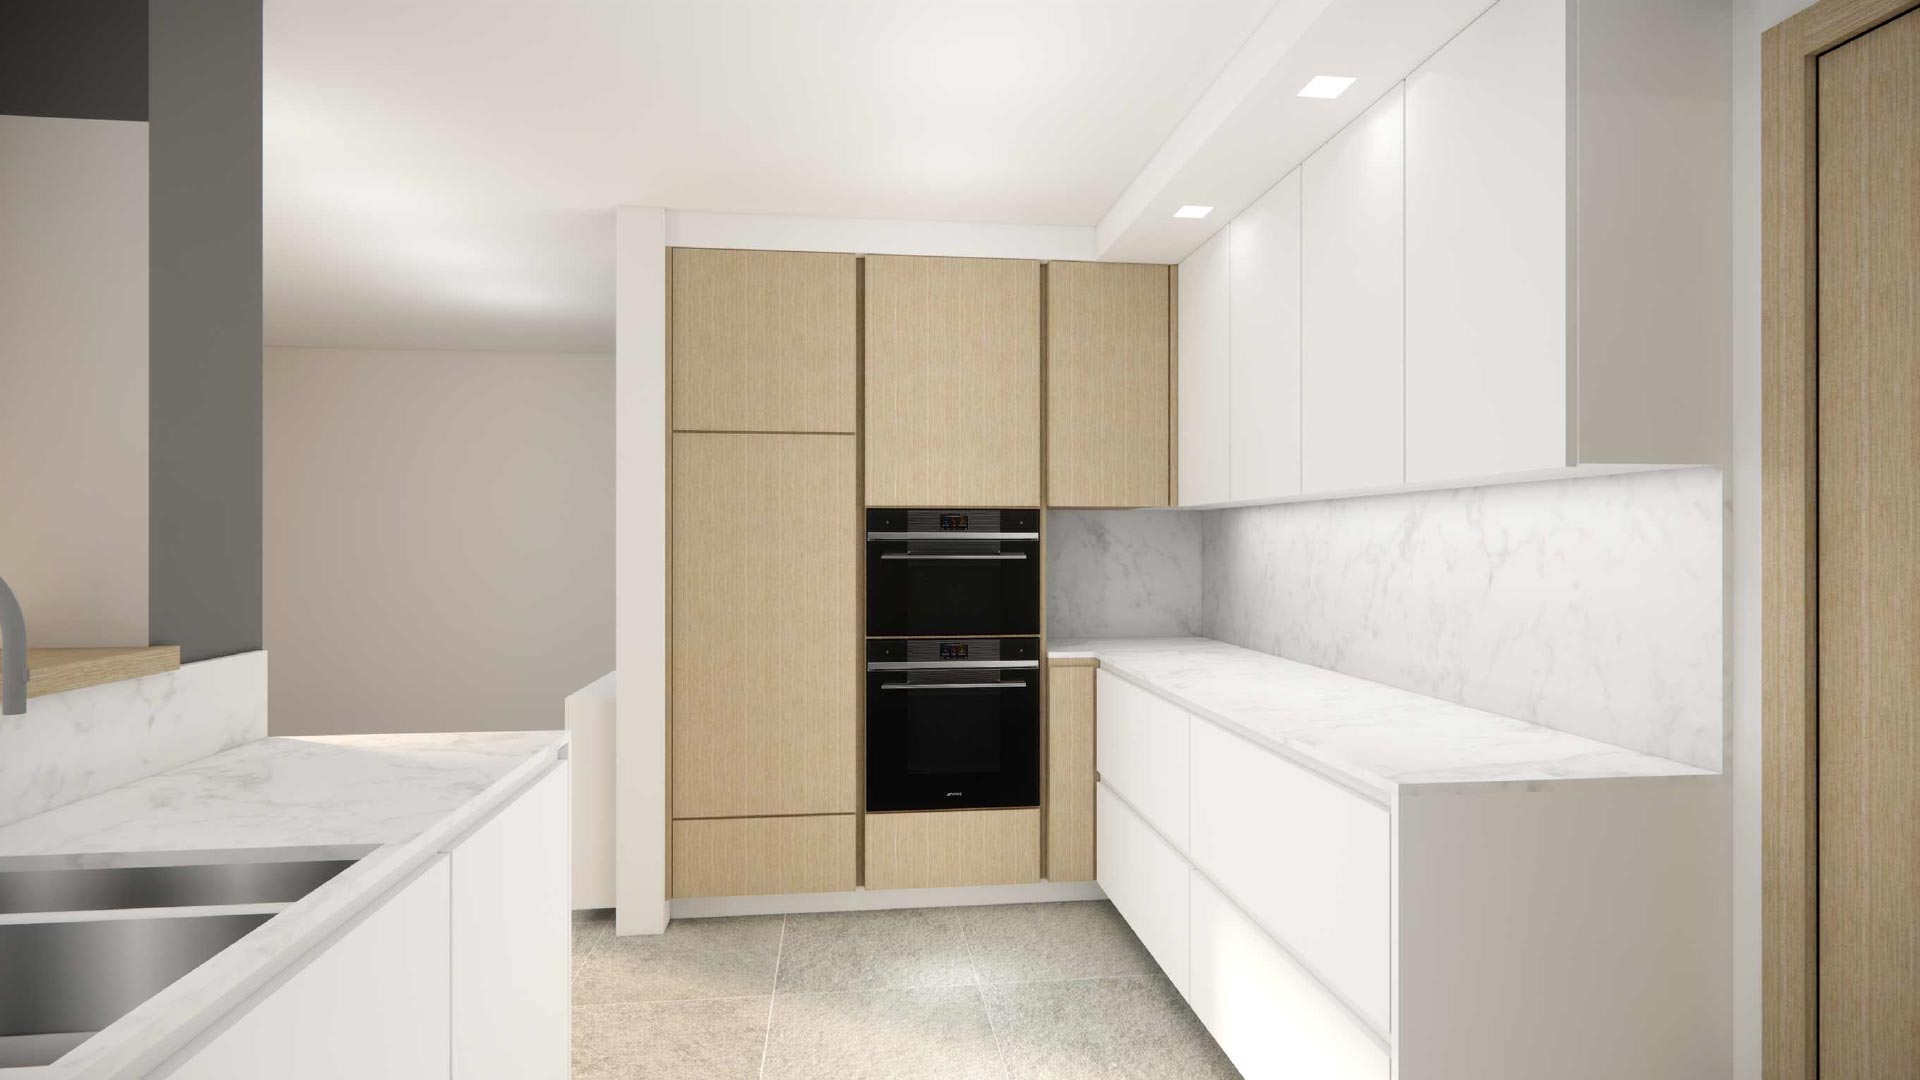 Voorontwerp moderne witte keuken met beige details